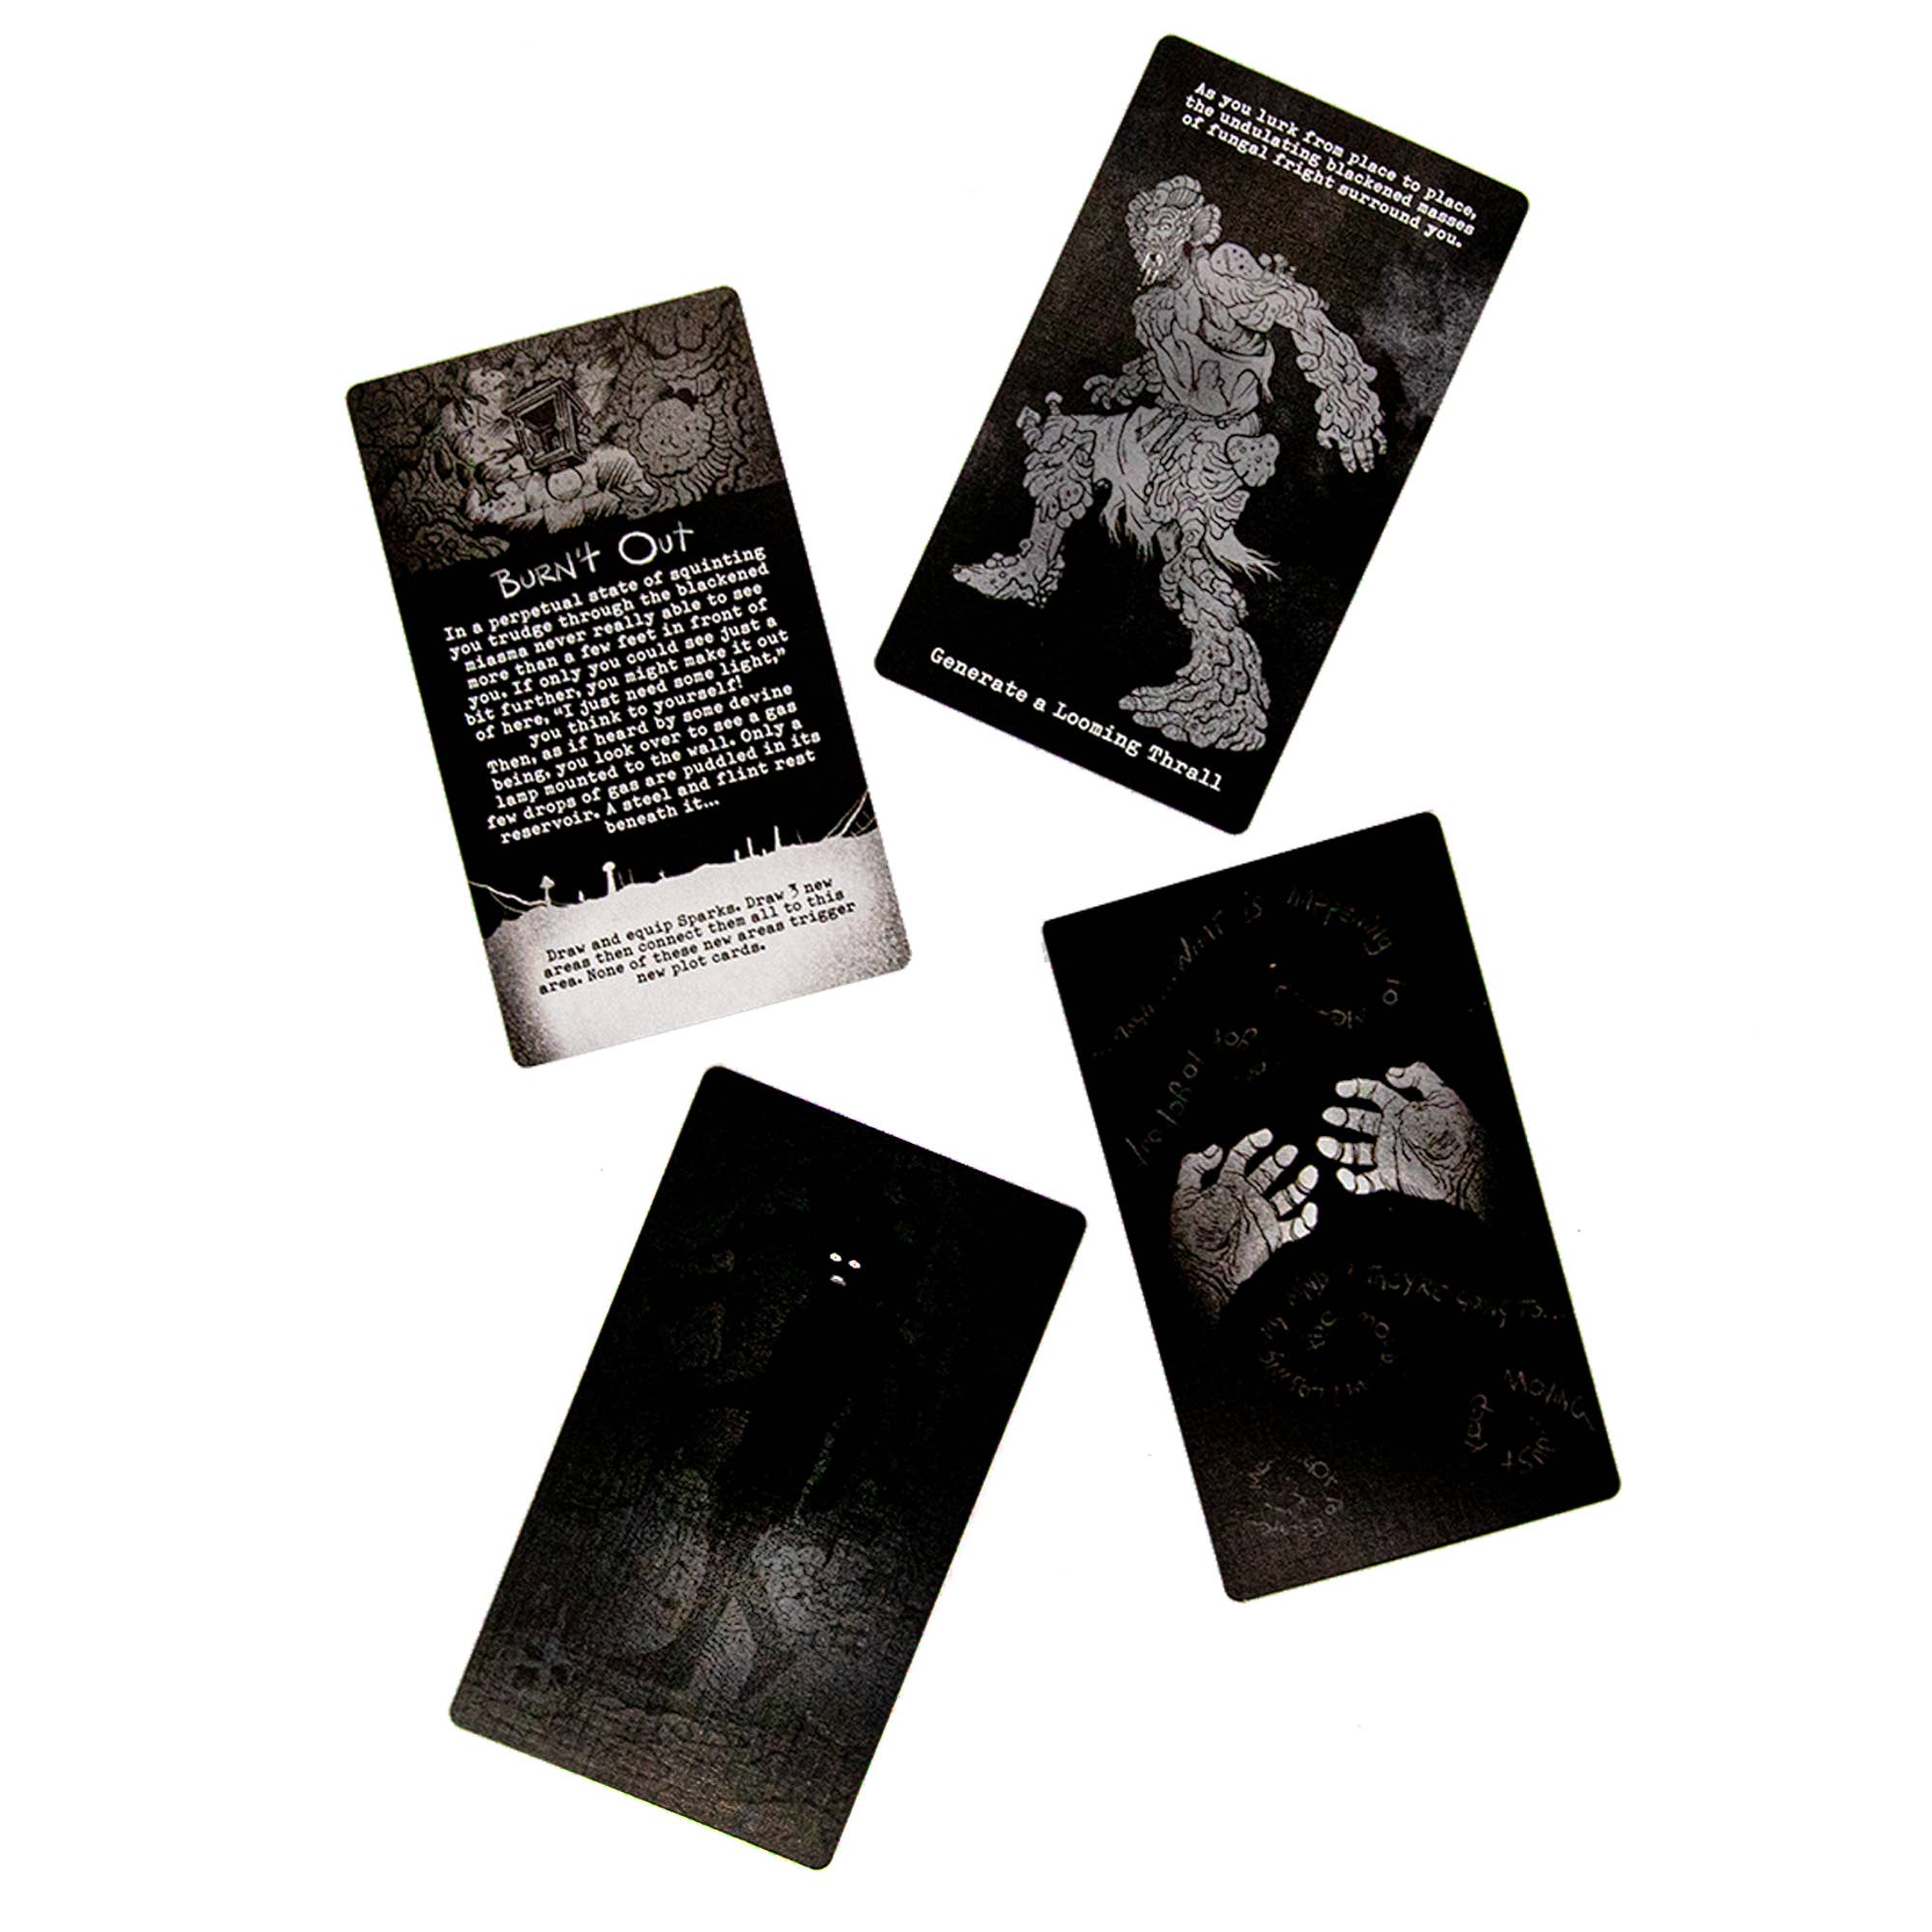 Black Mold [Pre-Order] - Bards & Cards